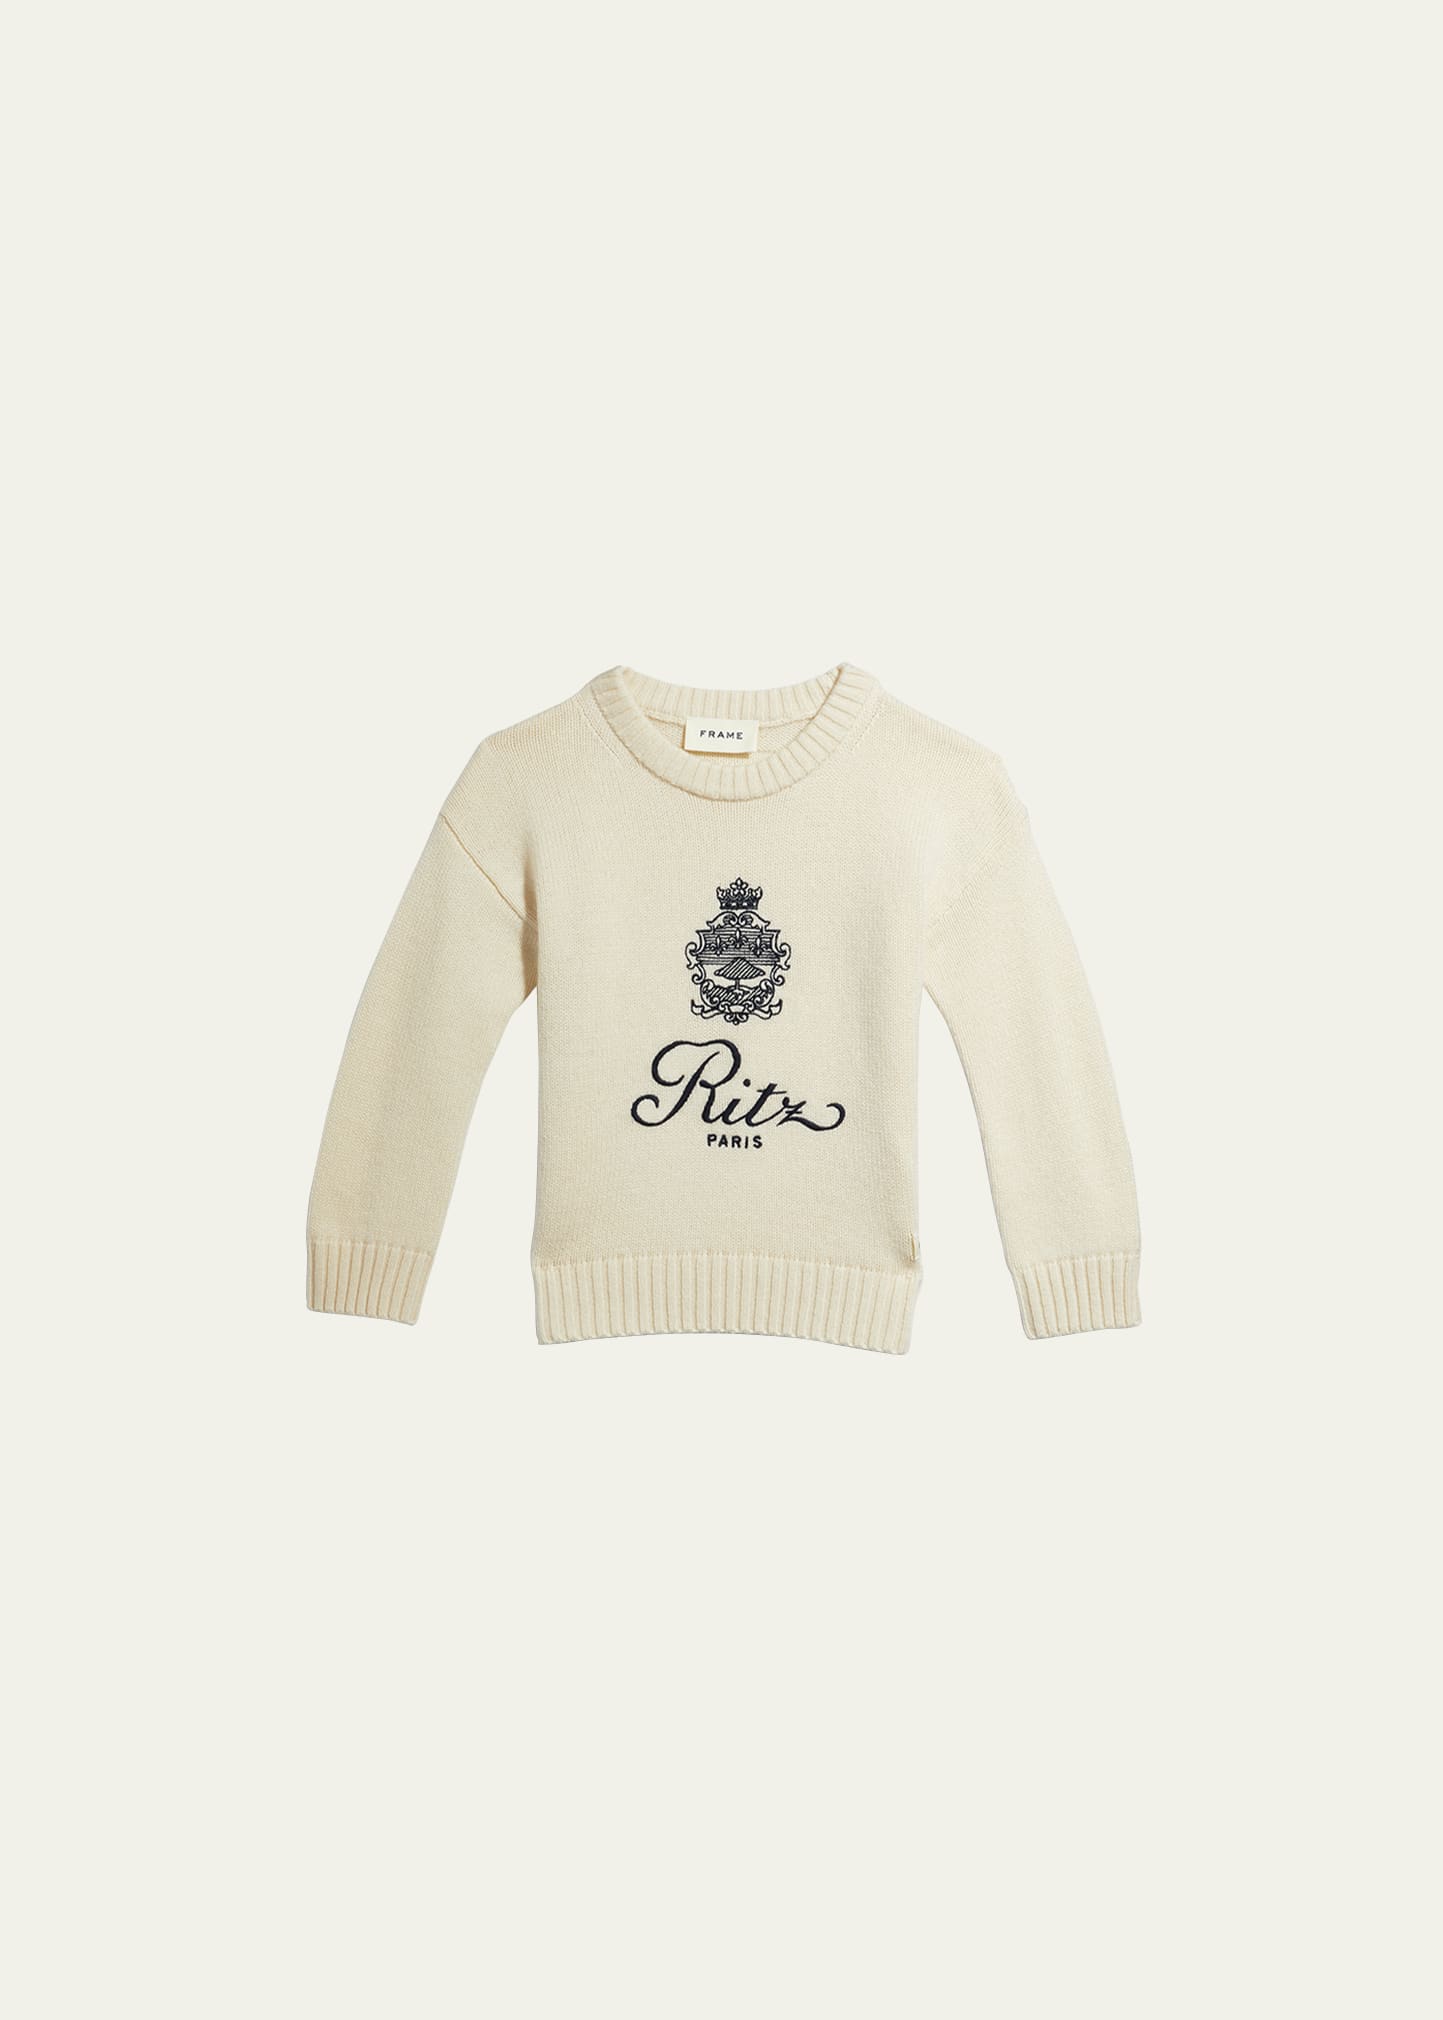 FRAME x Ritz Paris Kid's Cashmere Sweater, Size 6-12